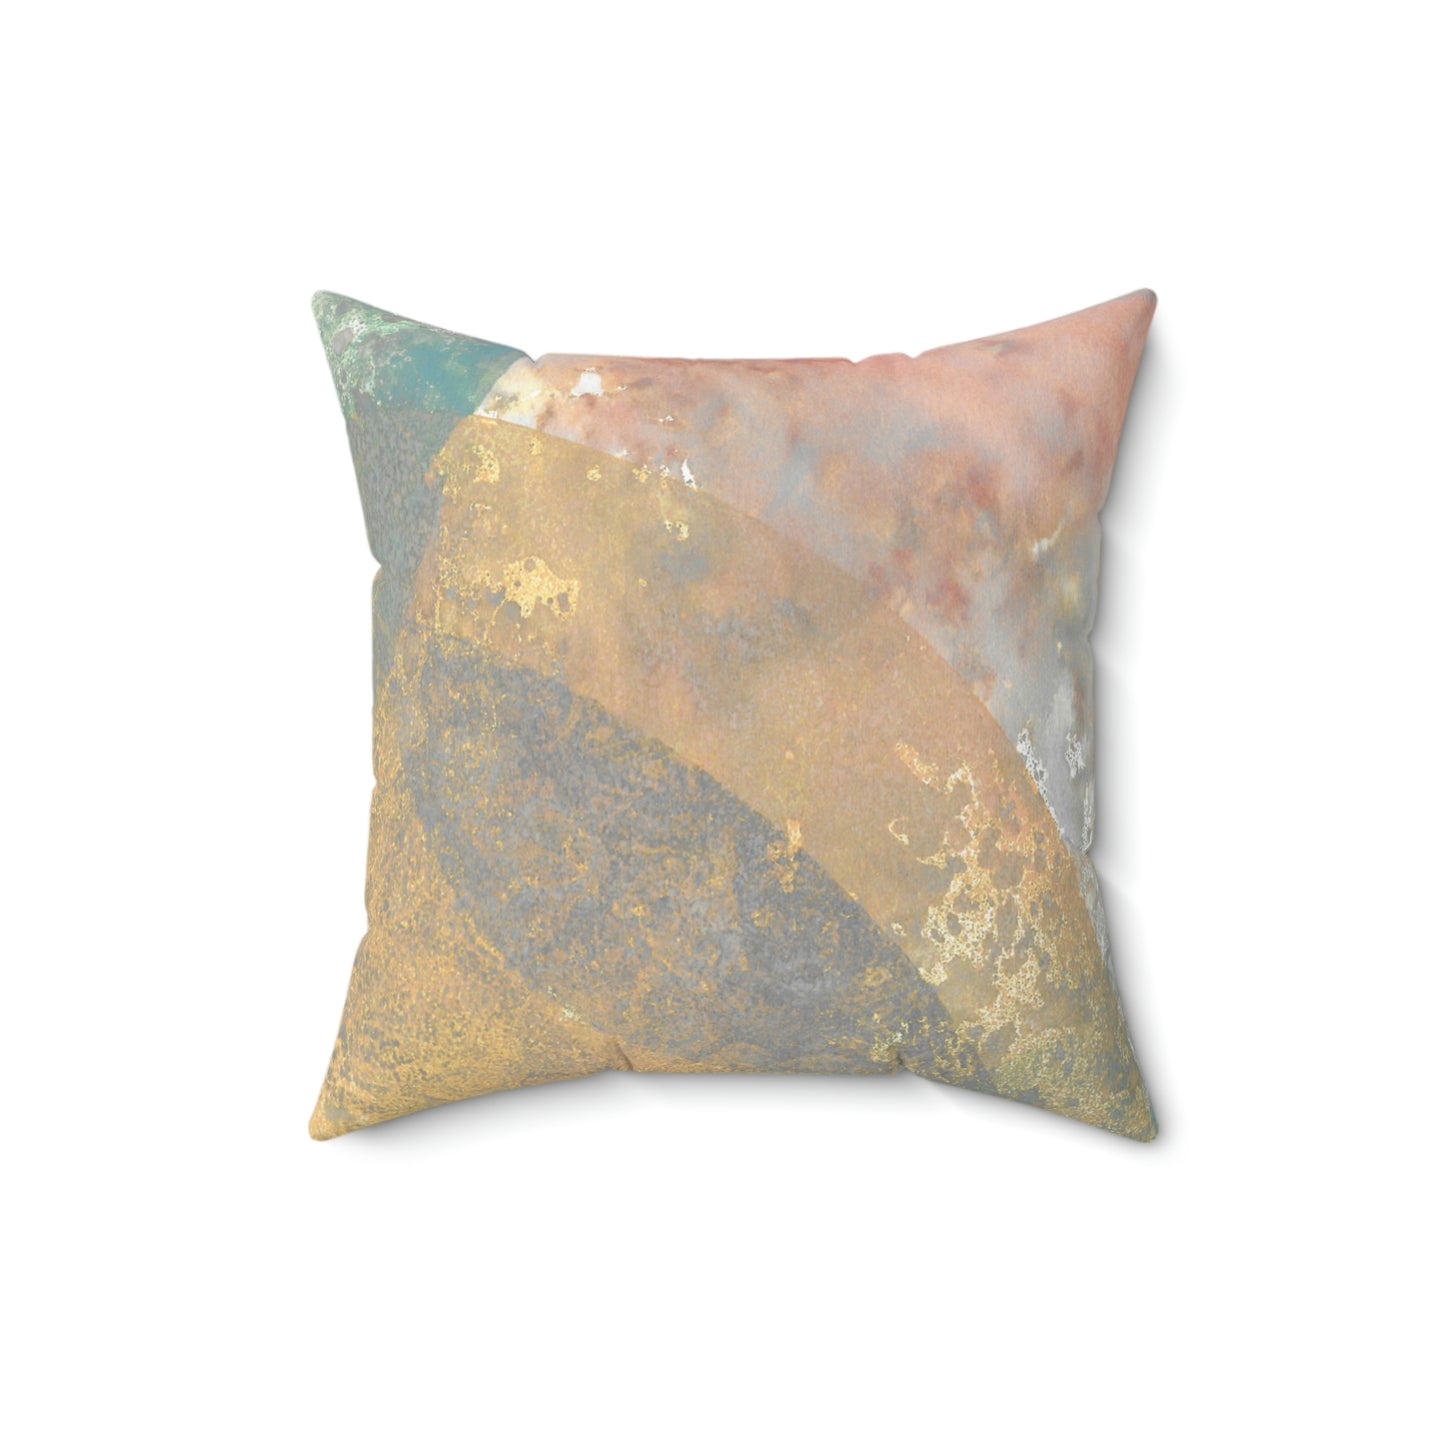 Dusty Sunset Square Pillow - Alja Design